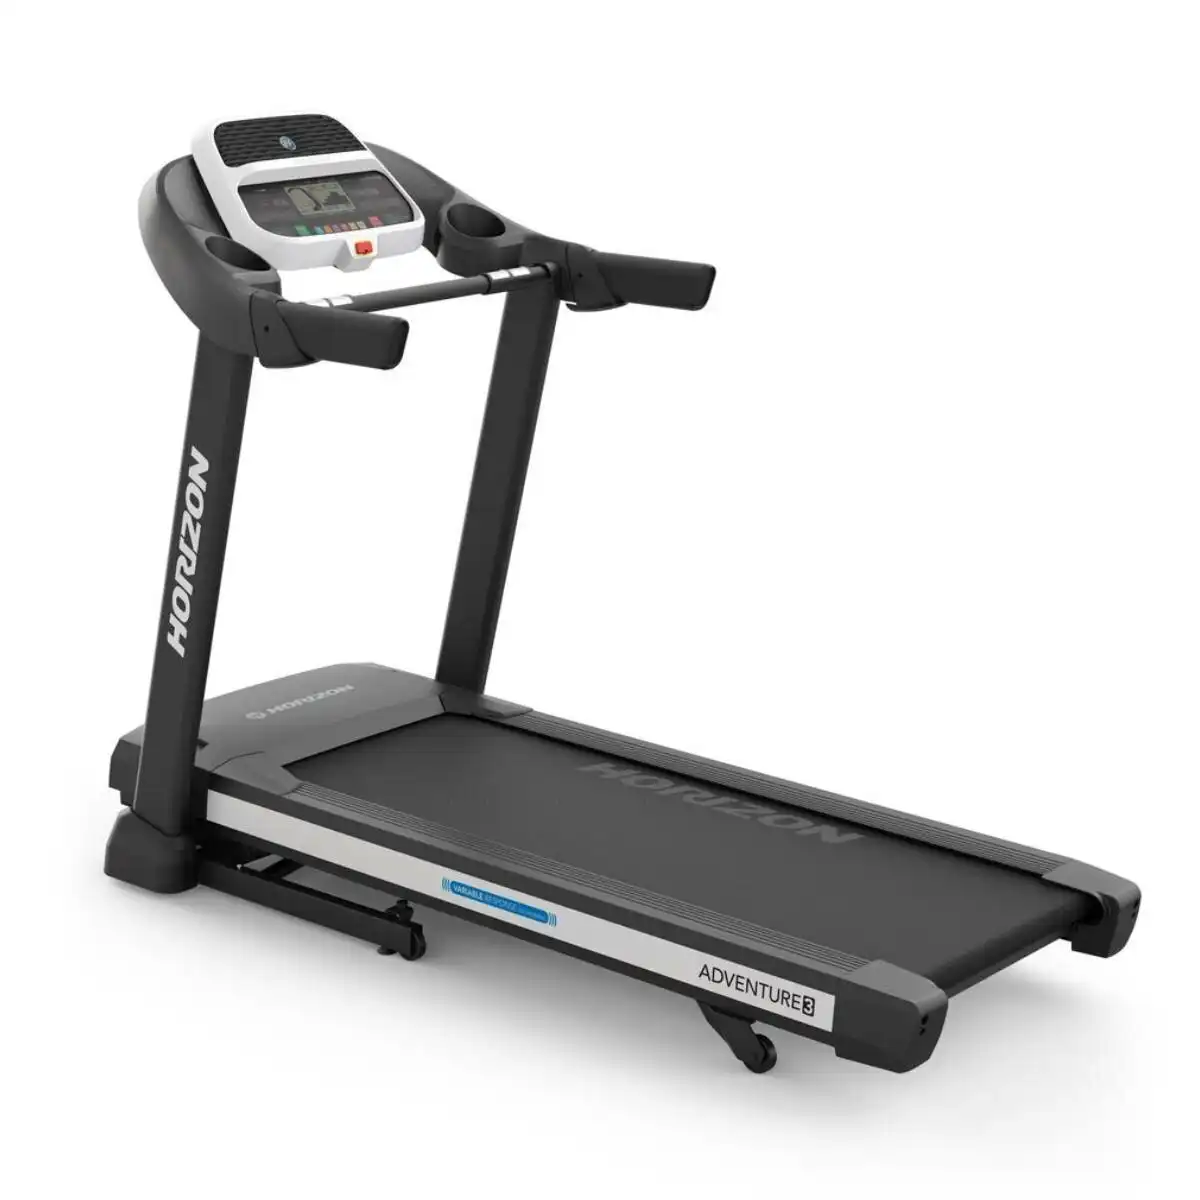 Horizon Fitness Horizon Adventure 3 Treadmill